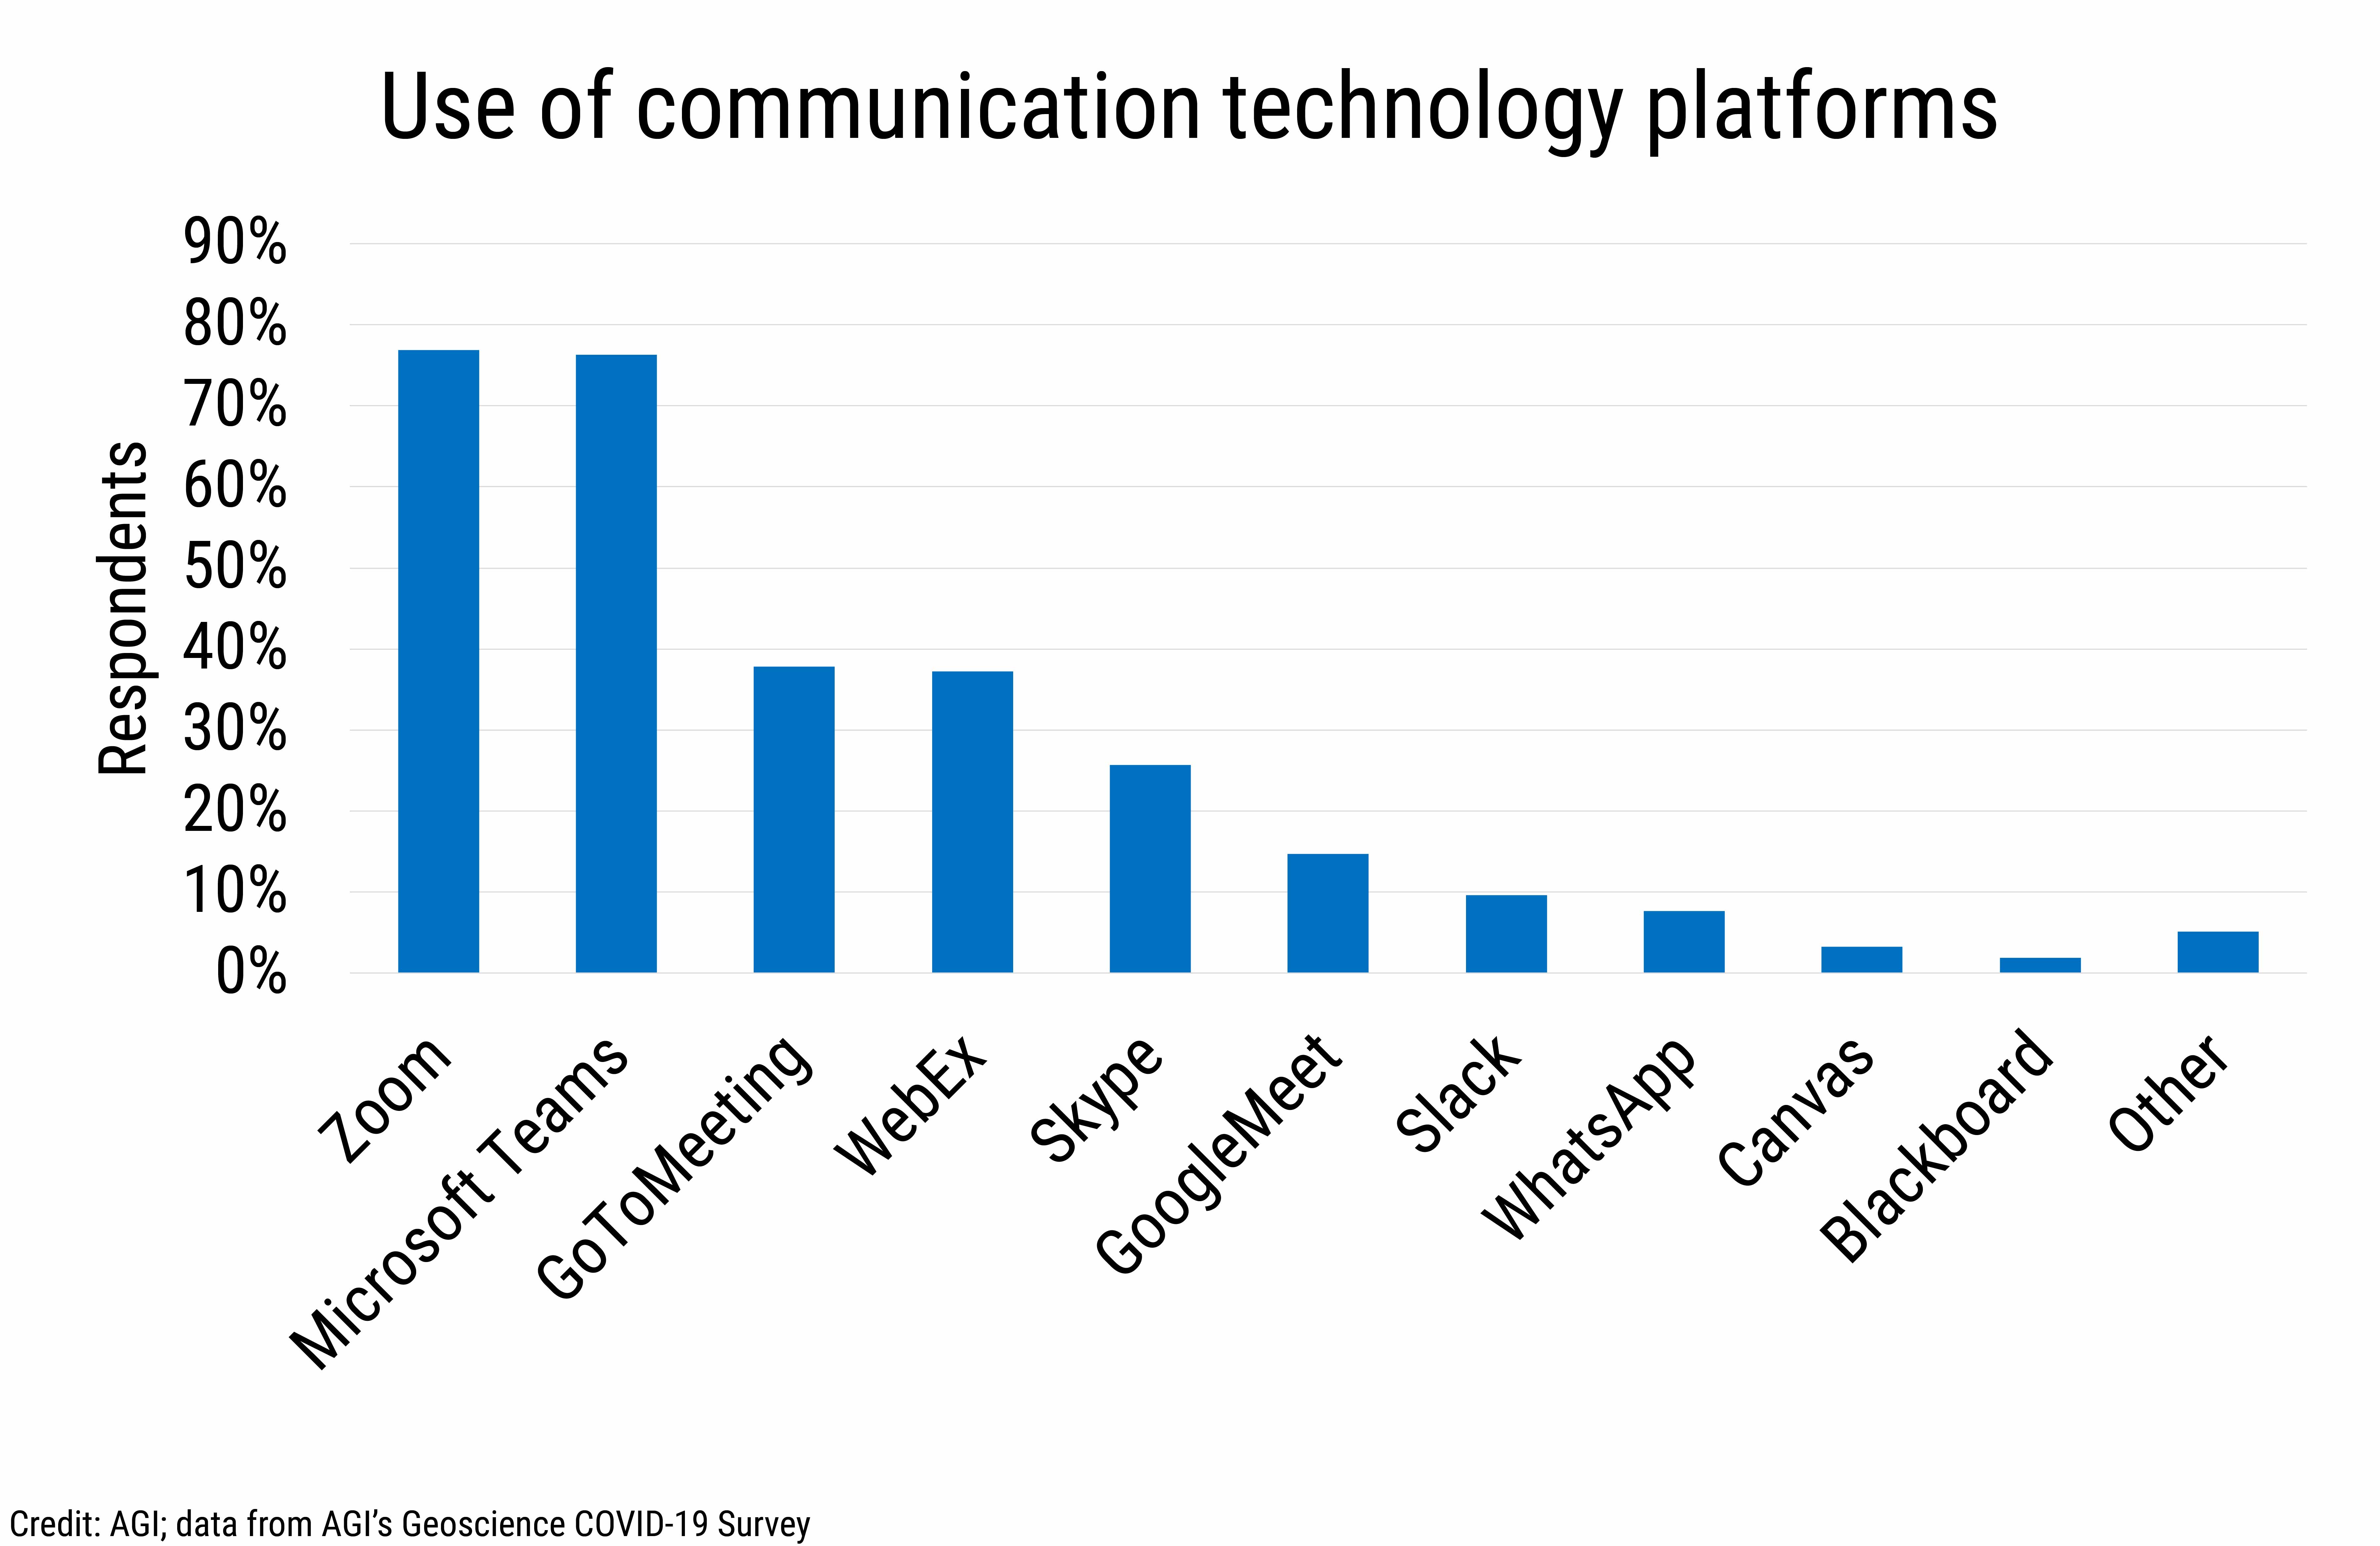 DB_2021-007 chart 04: Use of communication technology platforms (Credit: AGI; data from AGI's Geoscience COVID-19 Survey)